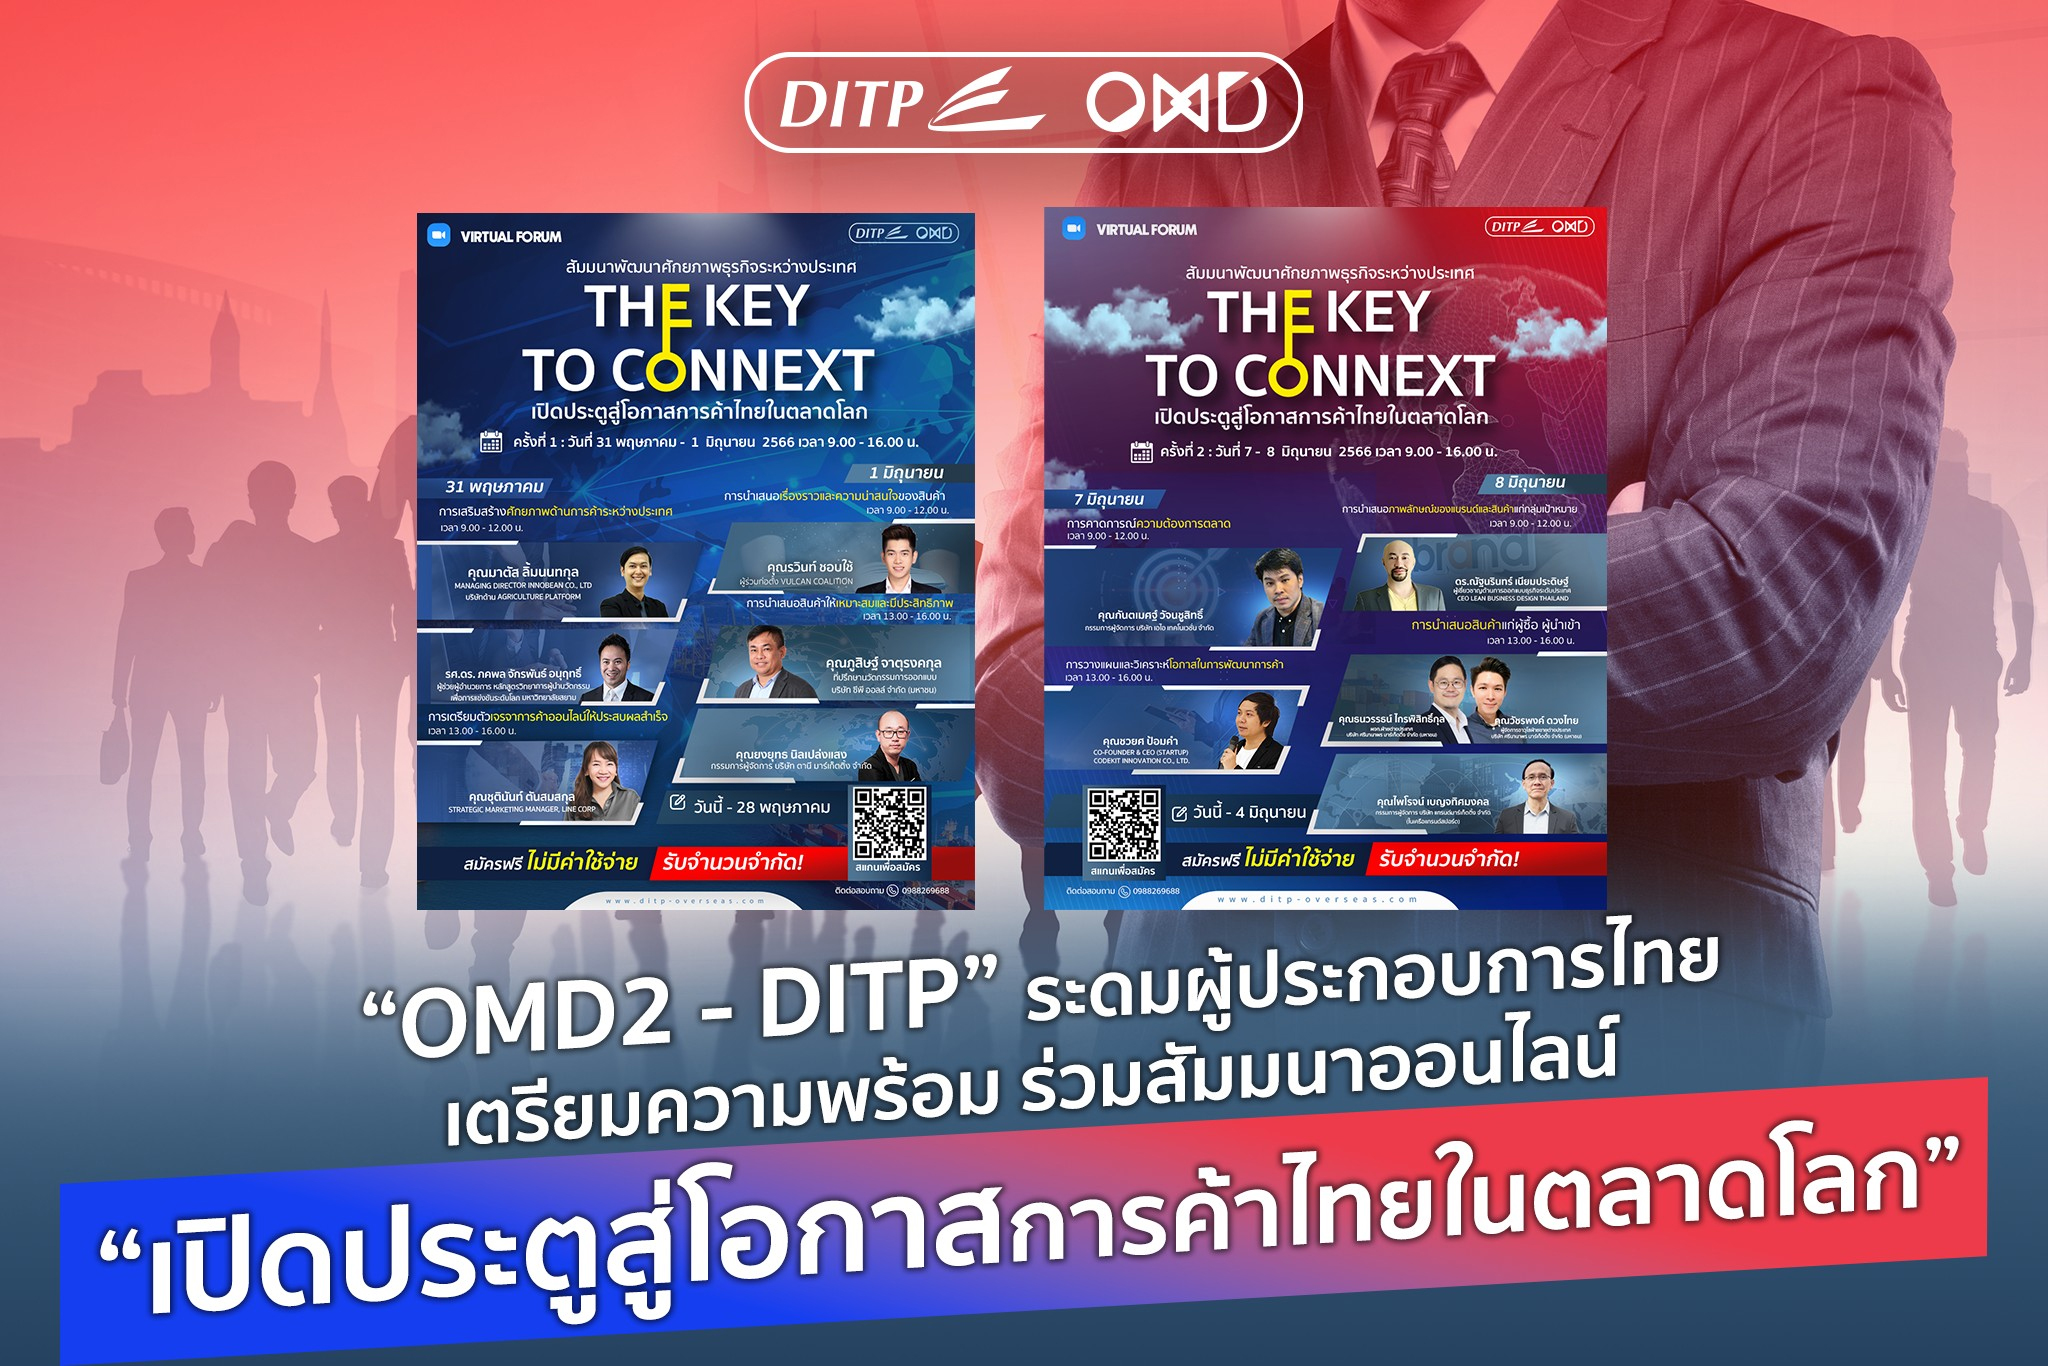 “OMD2-DITP” ระดมผู้ประกอบการไทย เตรียมความพร้อม ร่วมสัมนาออนไลน์ “เปิดประตูสู่โอกาสการค้าไทยในตลาดโลก”